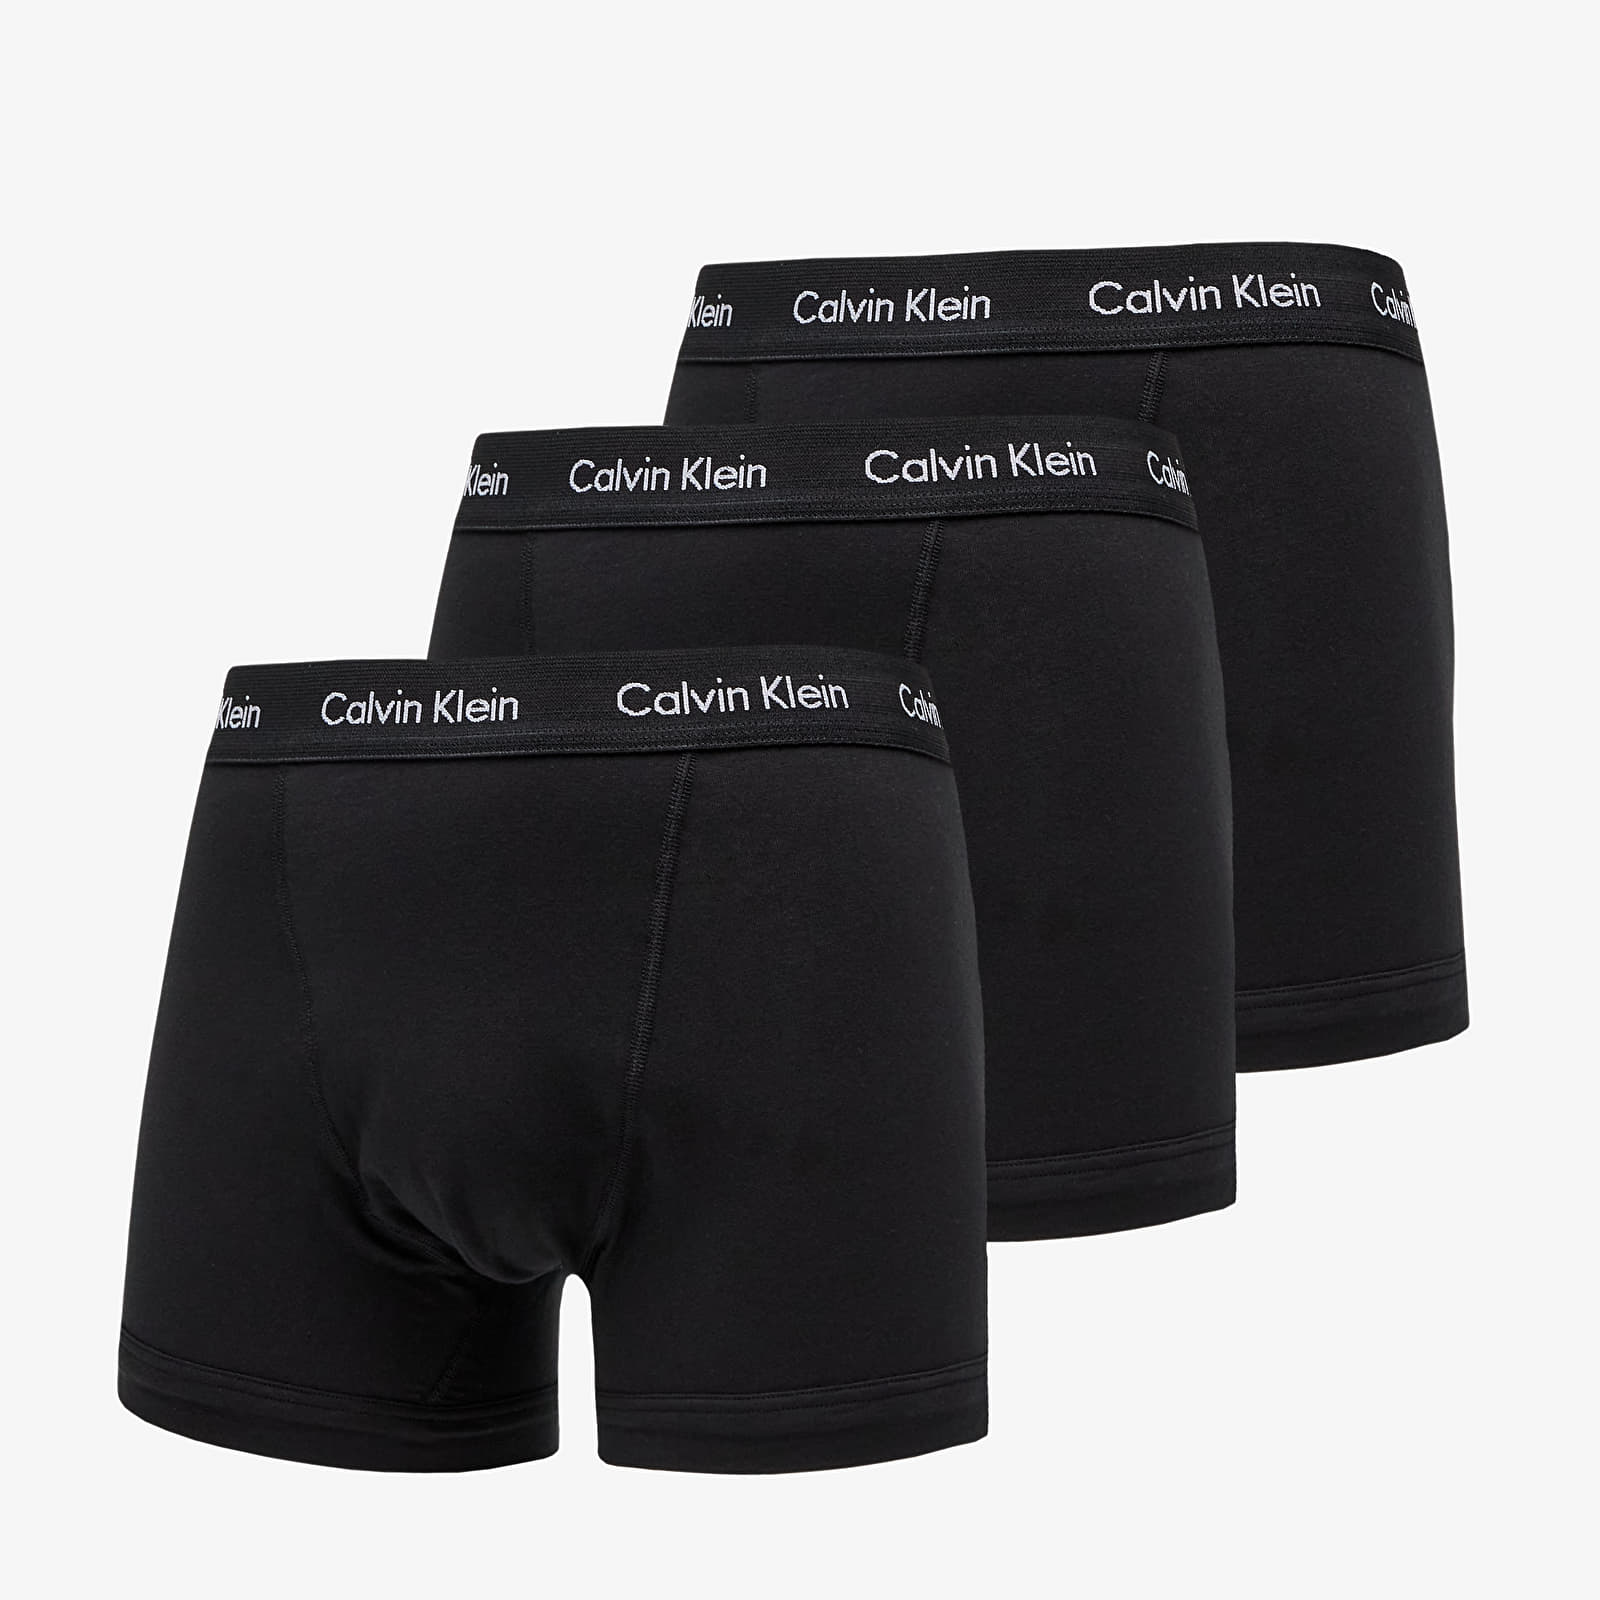 Boxeri Calvin Klein 3-Pack Trunks Cotton Stretch Black